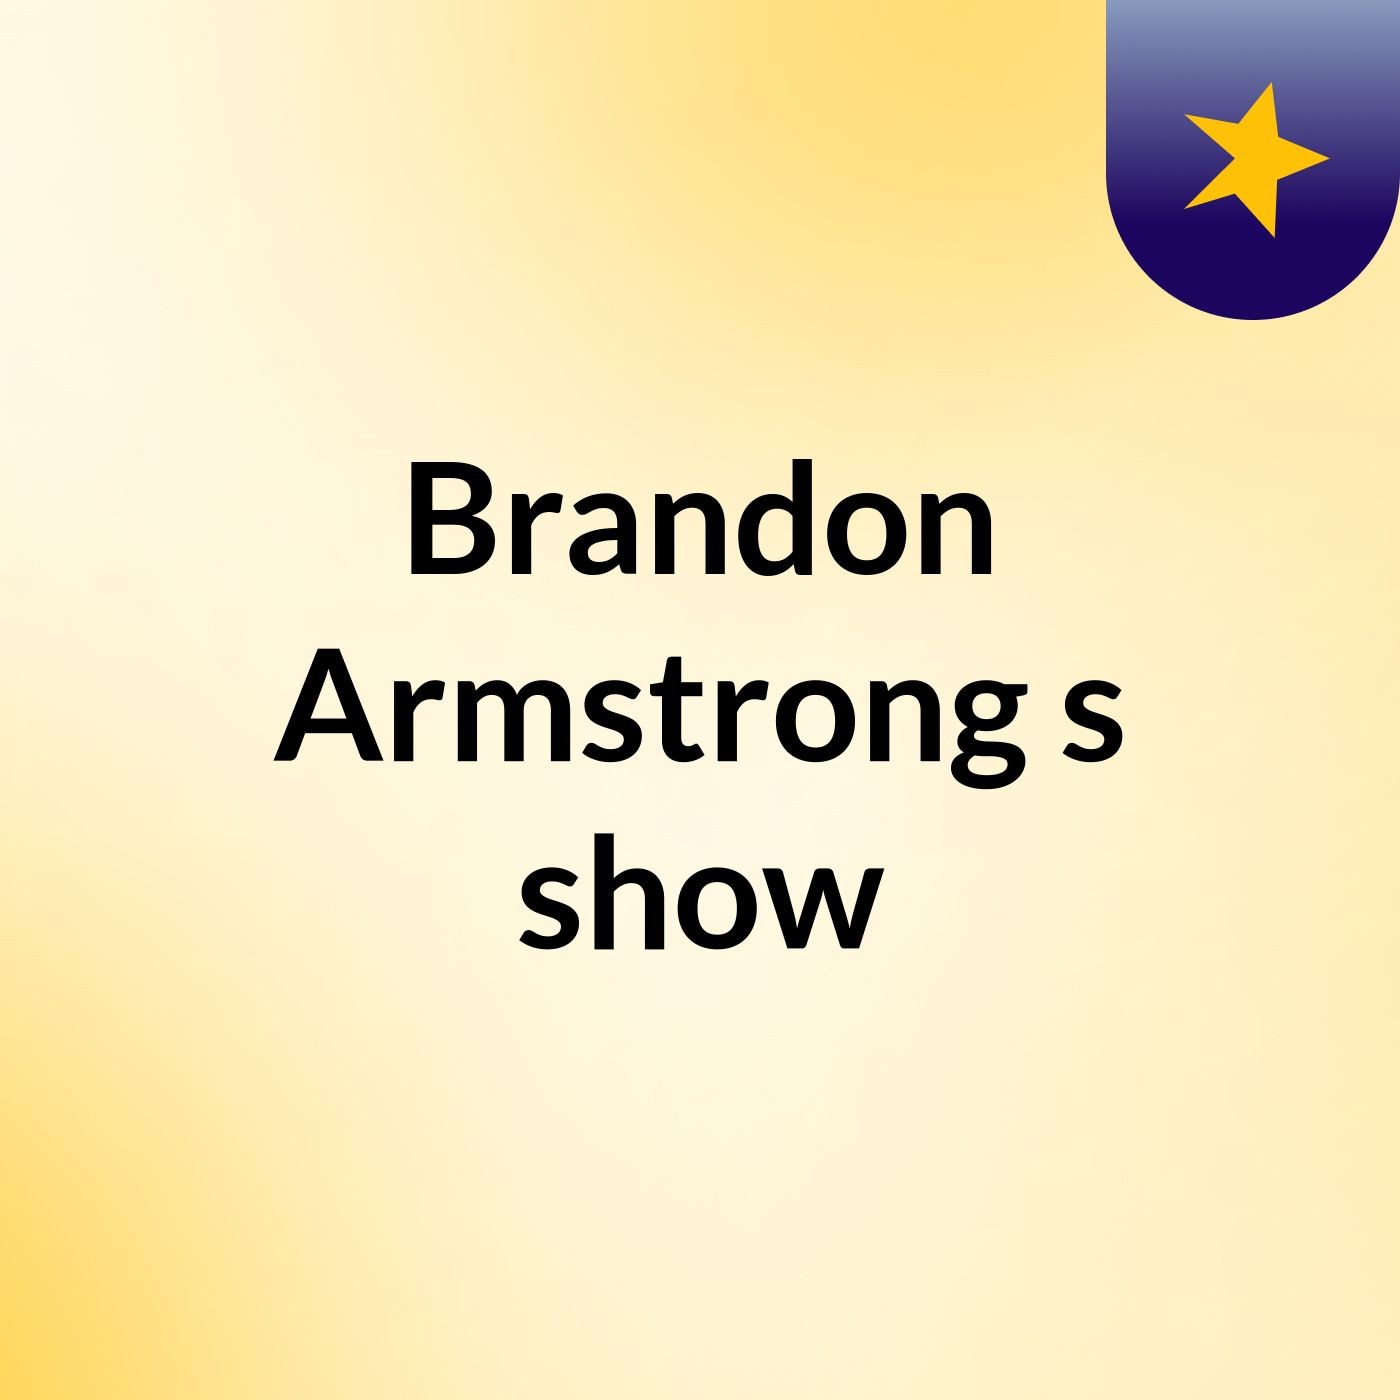 Brandon Armstrong's show